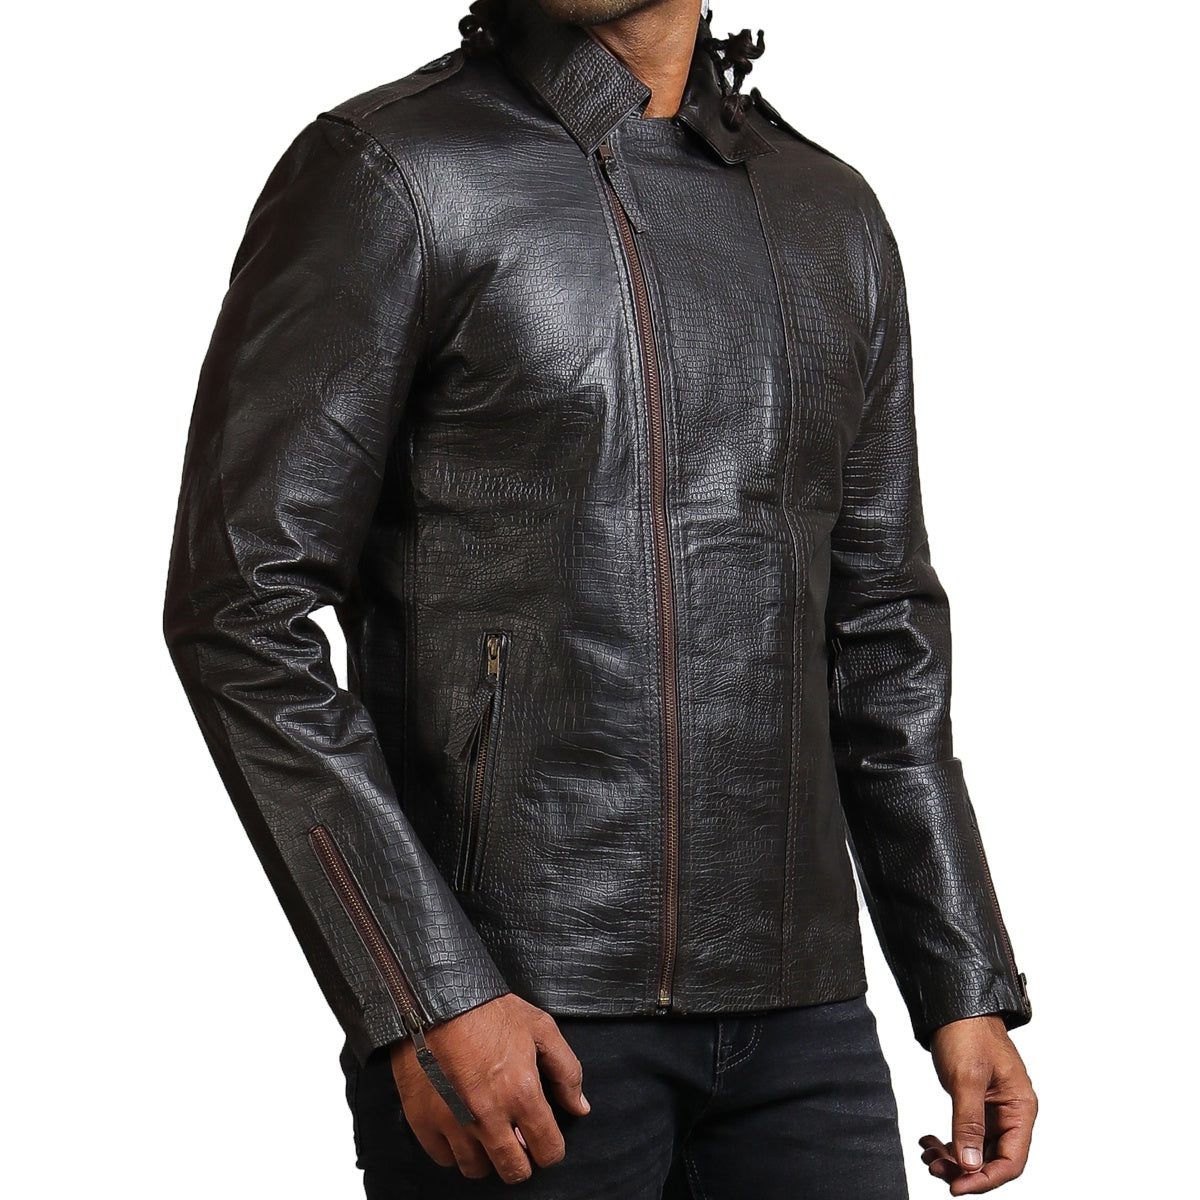 Black Textured Motorcycle Leather Jacket